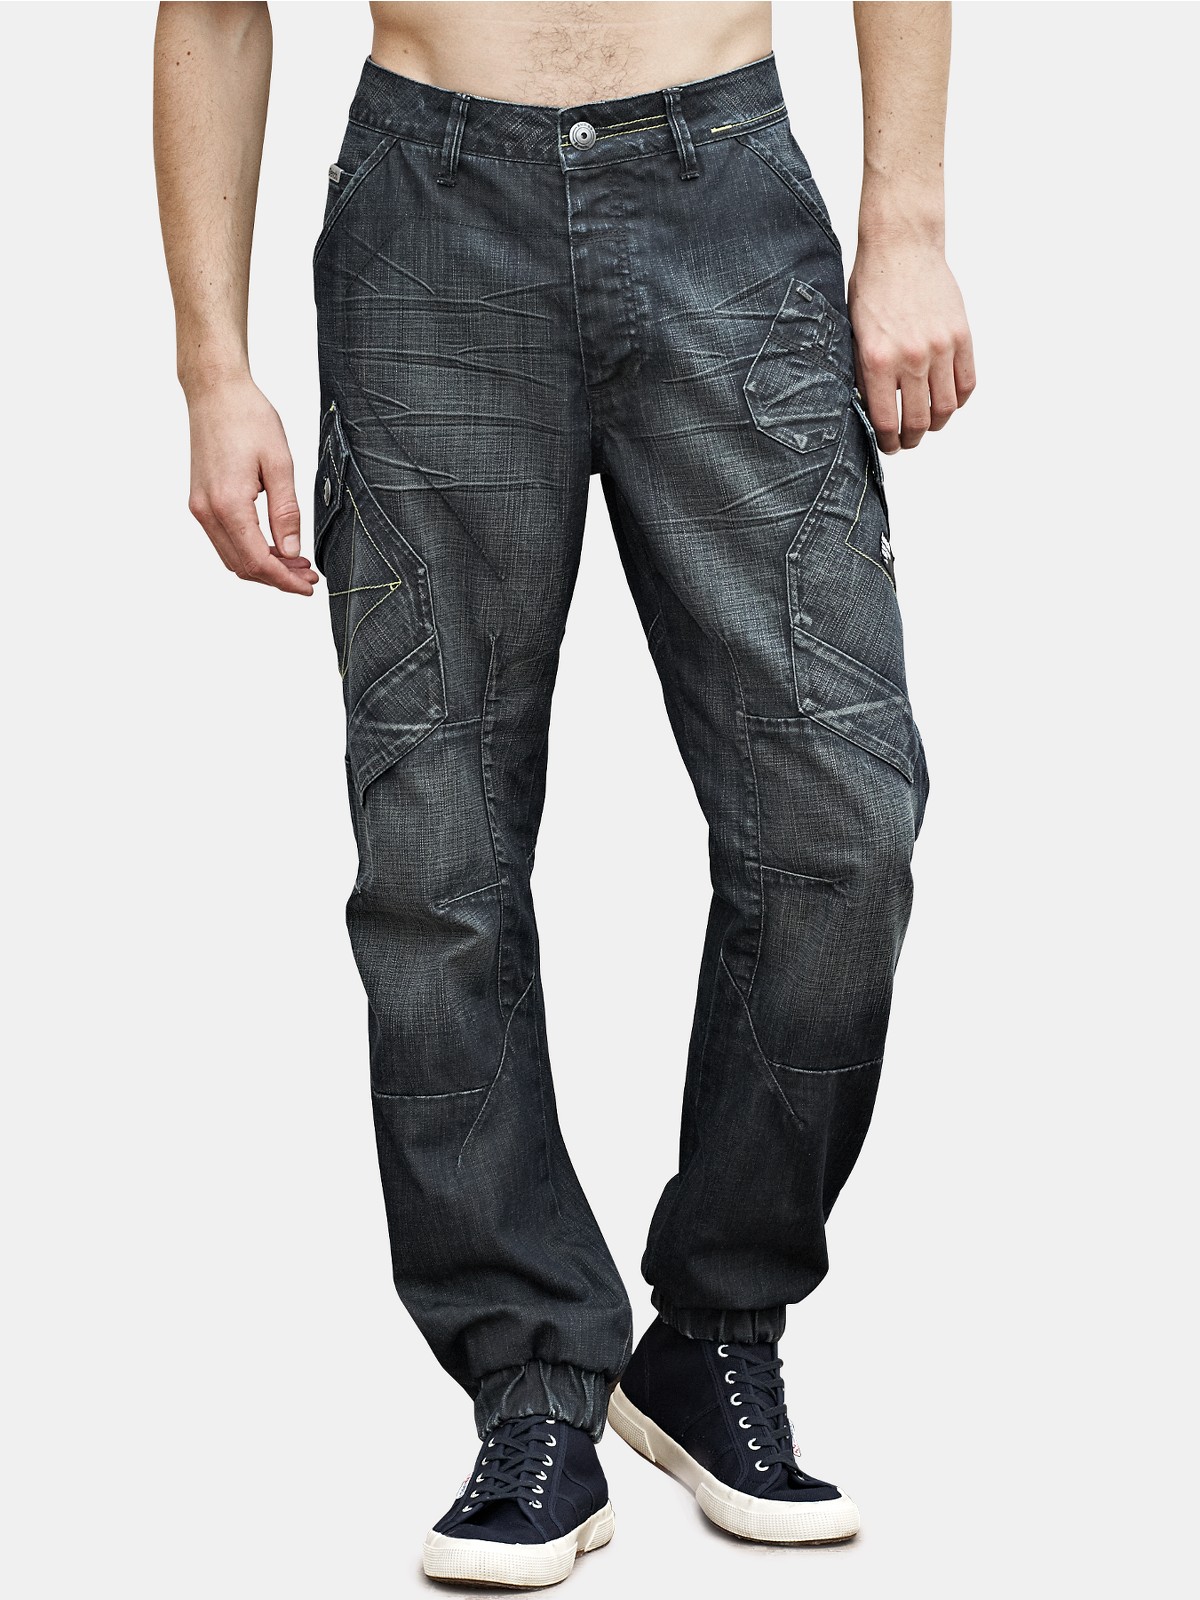 Fresh 15 of Bench Jeans Mens | fokleehom